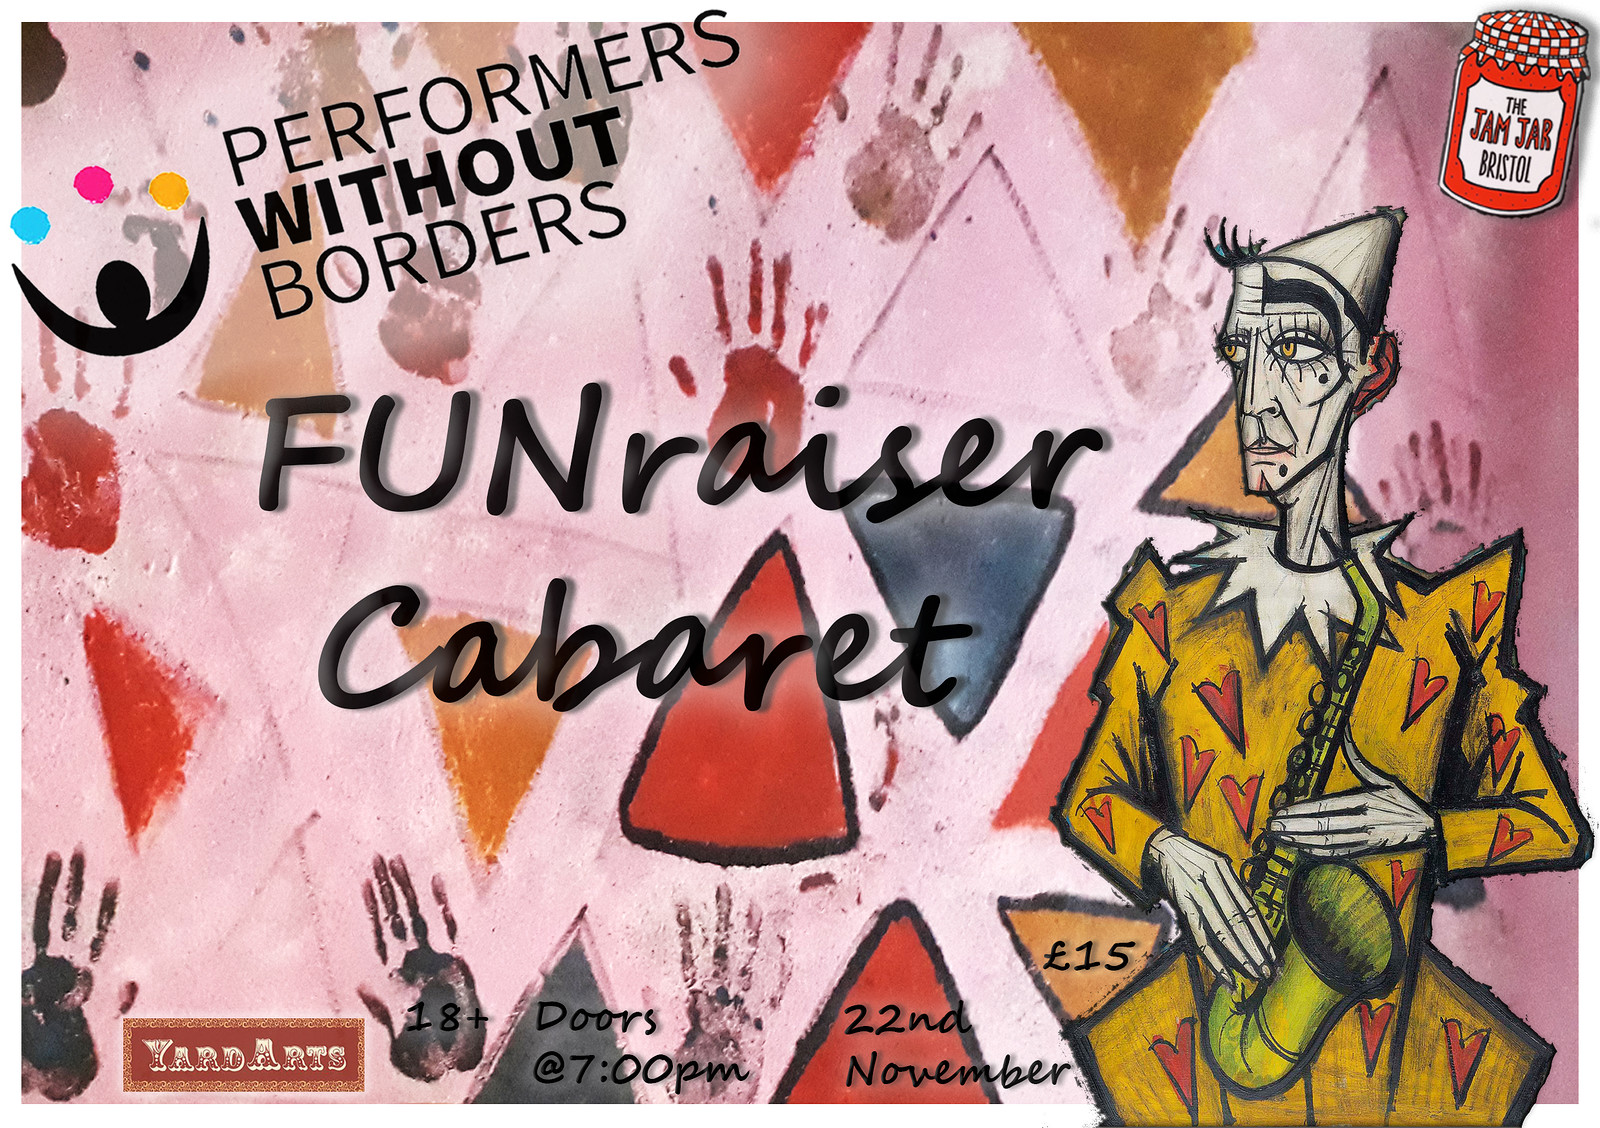 PWB Funraiser Cabaret at Jam Jar